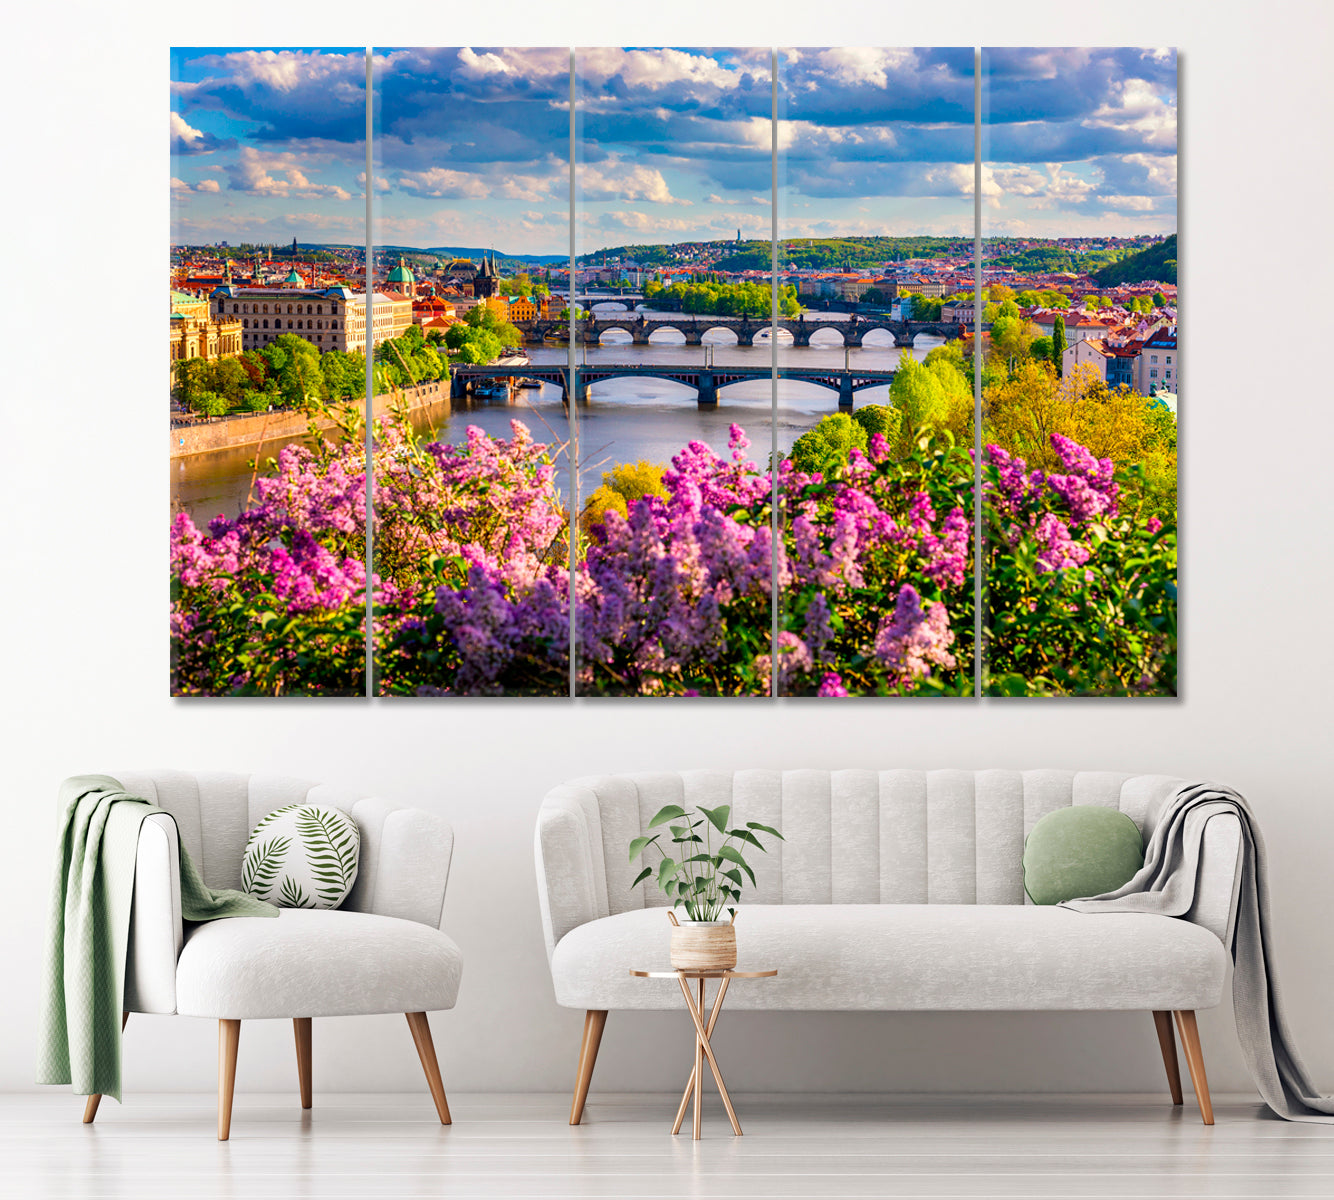 Charles Bridge over Vltava River Prague Czechia Canvas Print ArtLexy 5 Panels 36"x24" inches 